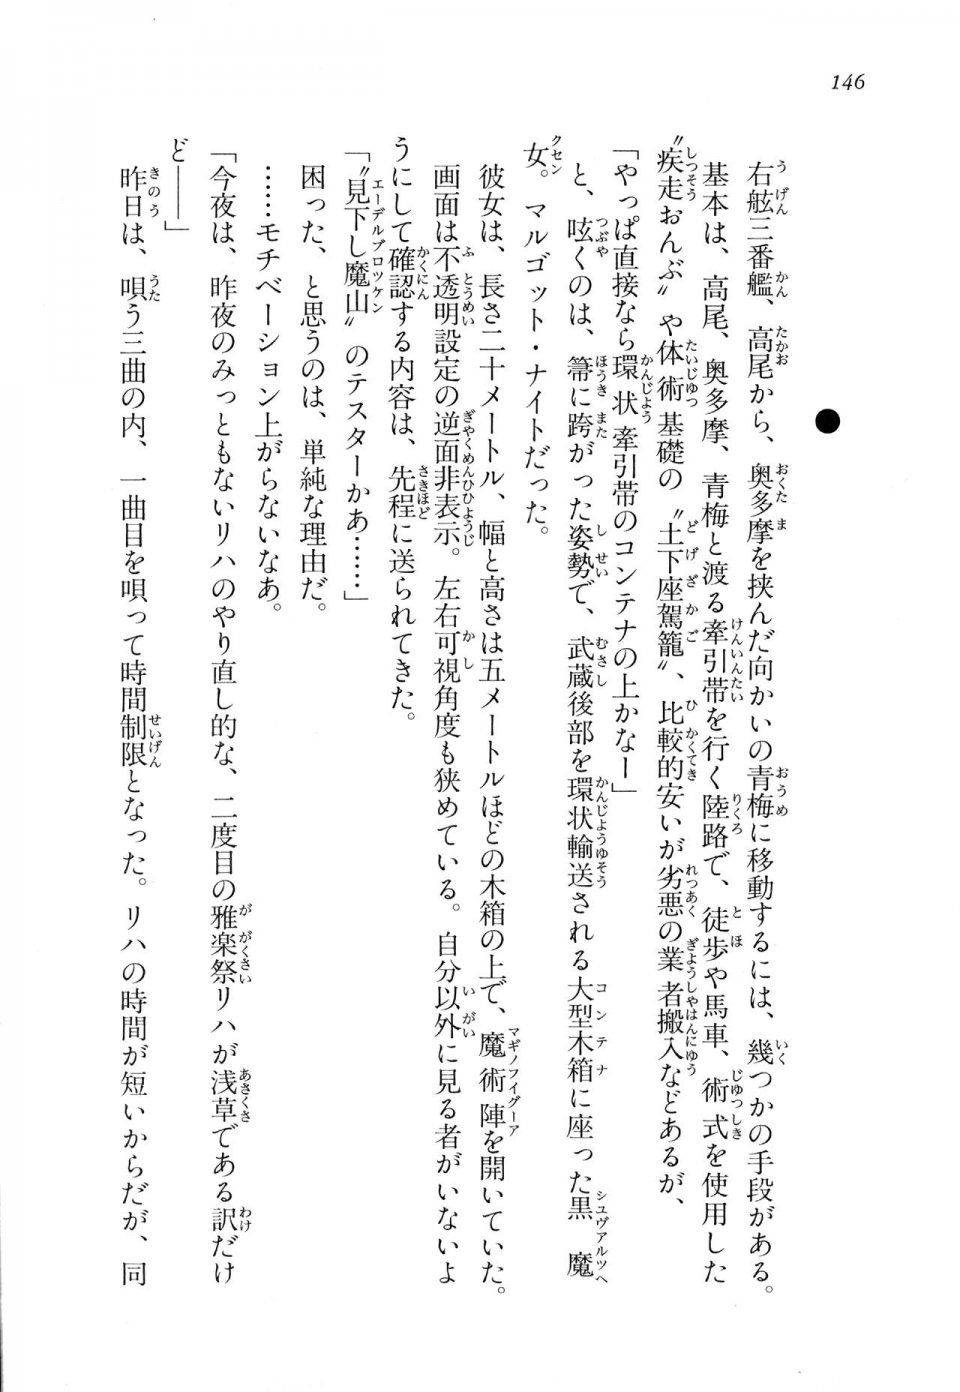 Kyoukai Senjou no Horizon BD Special Mininovel Vol 2(1B) - Photo #150